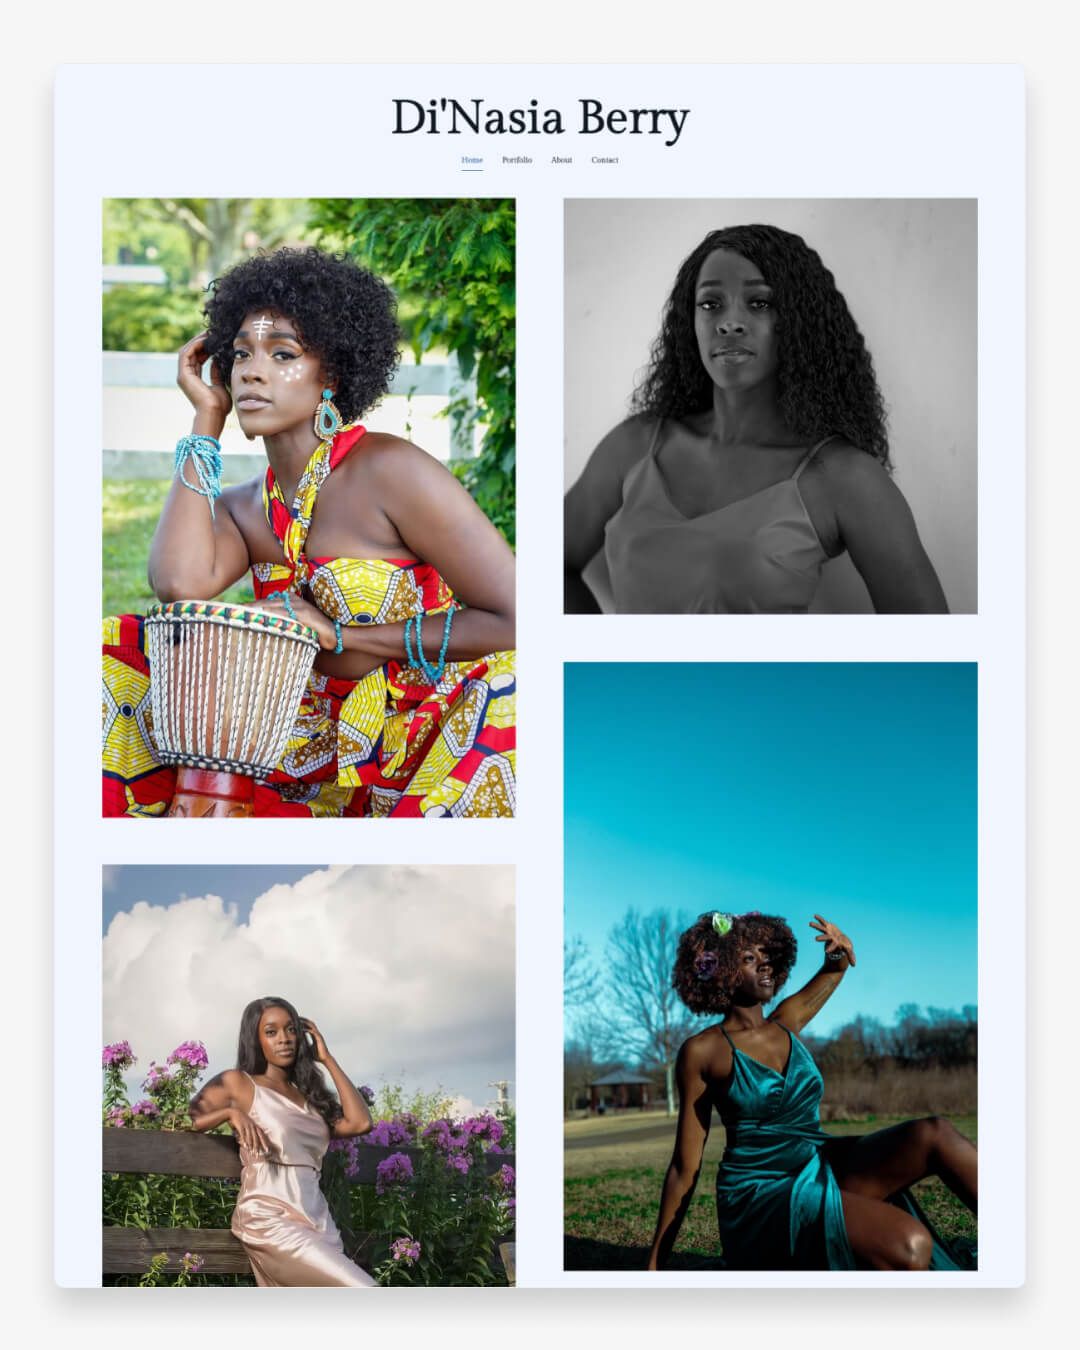 Di'Nasia Berry's Modelportfolio-website